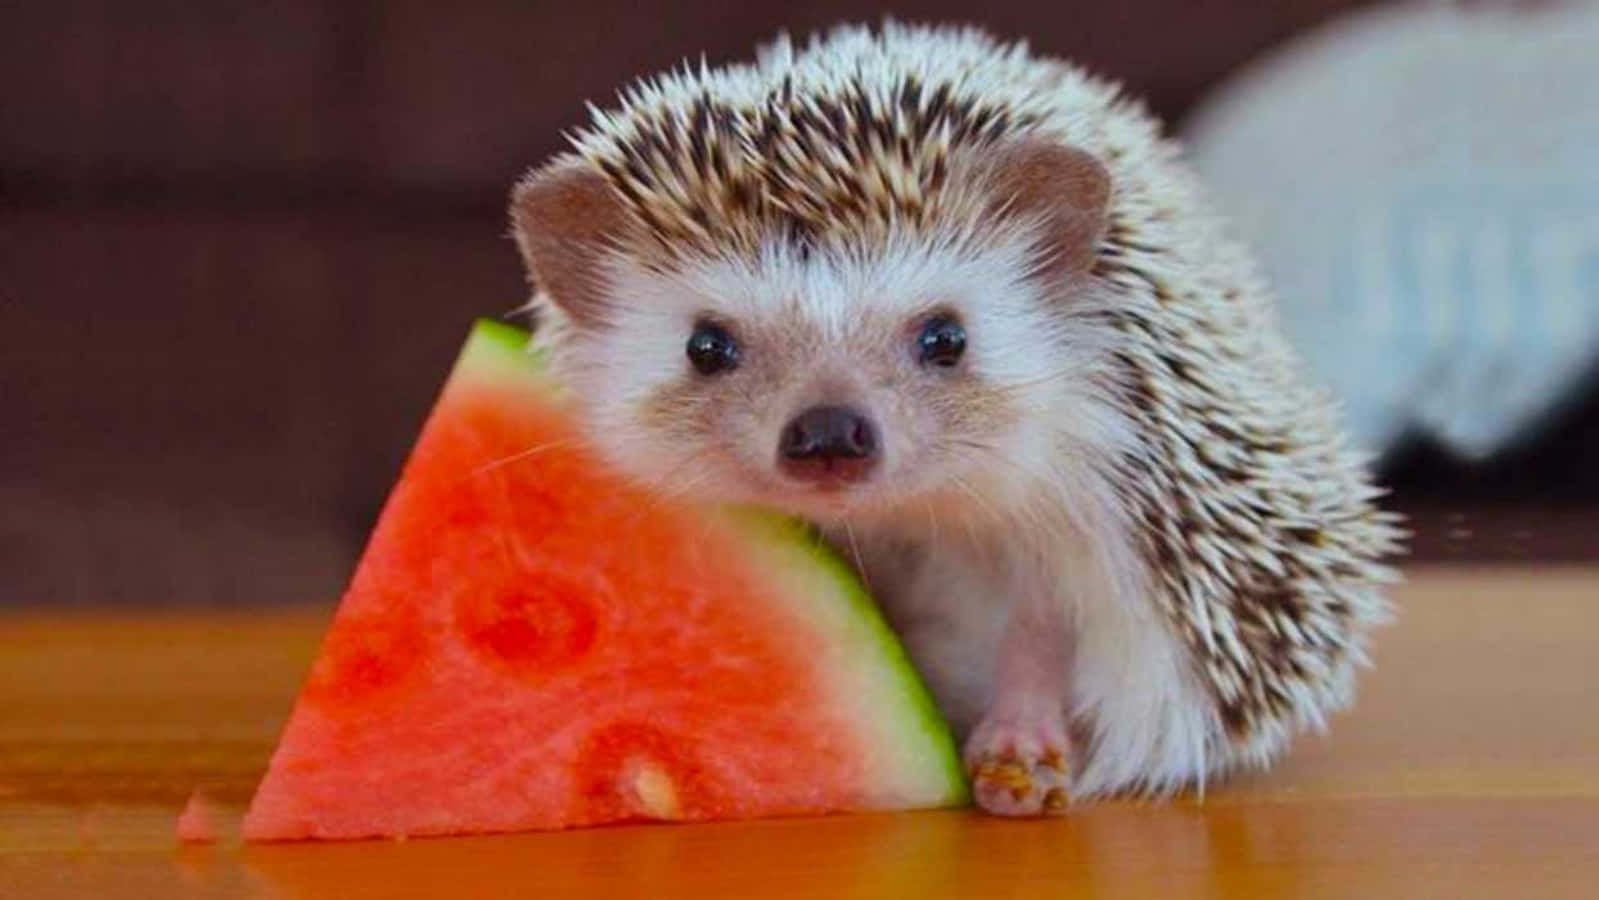 Cute Pet Hedgehog Watermelon Picture